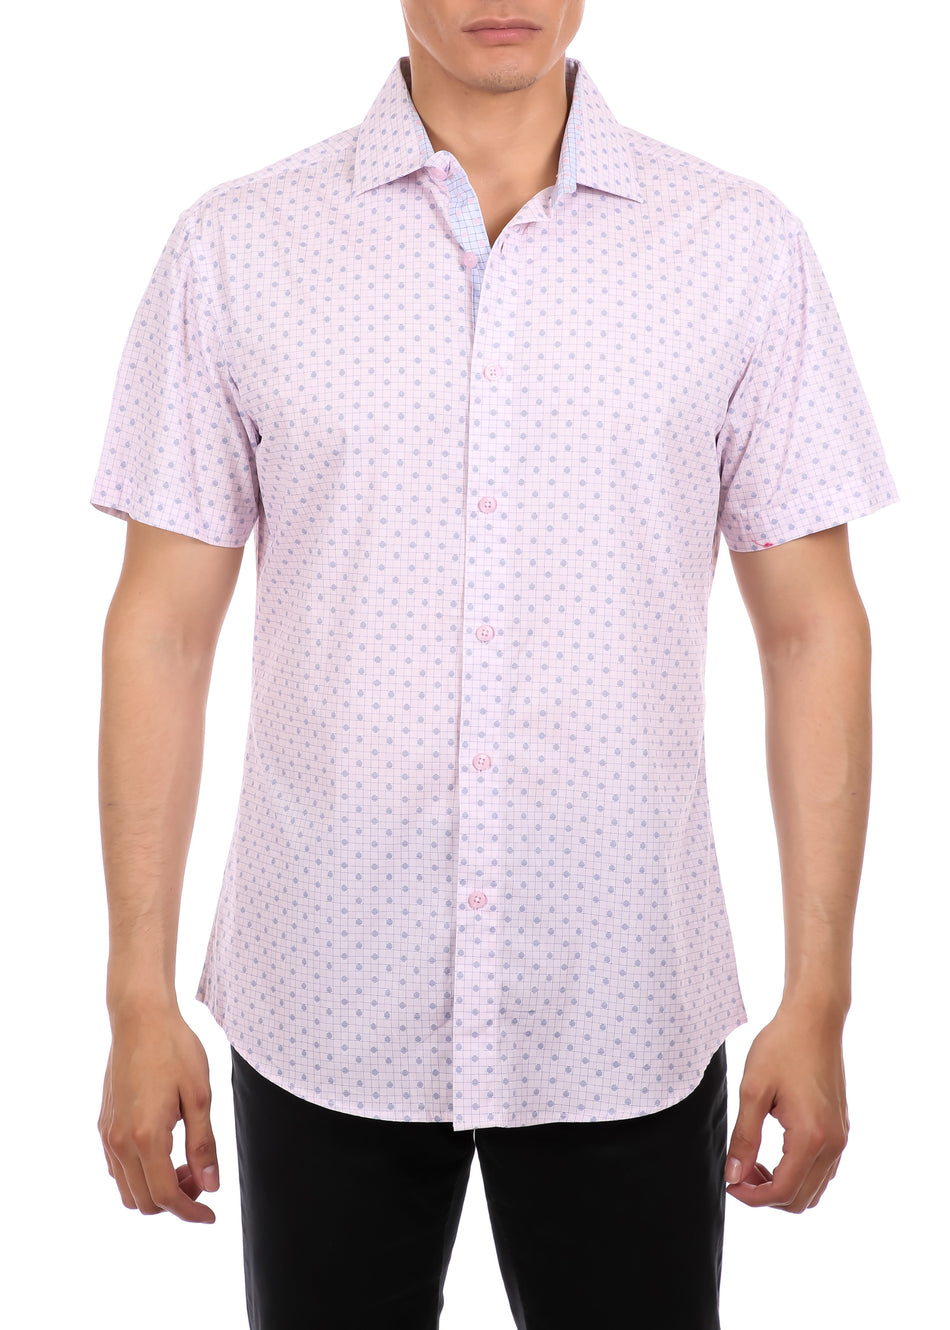 Dashed Dots Short Sleeve Dress Shirt Pink